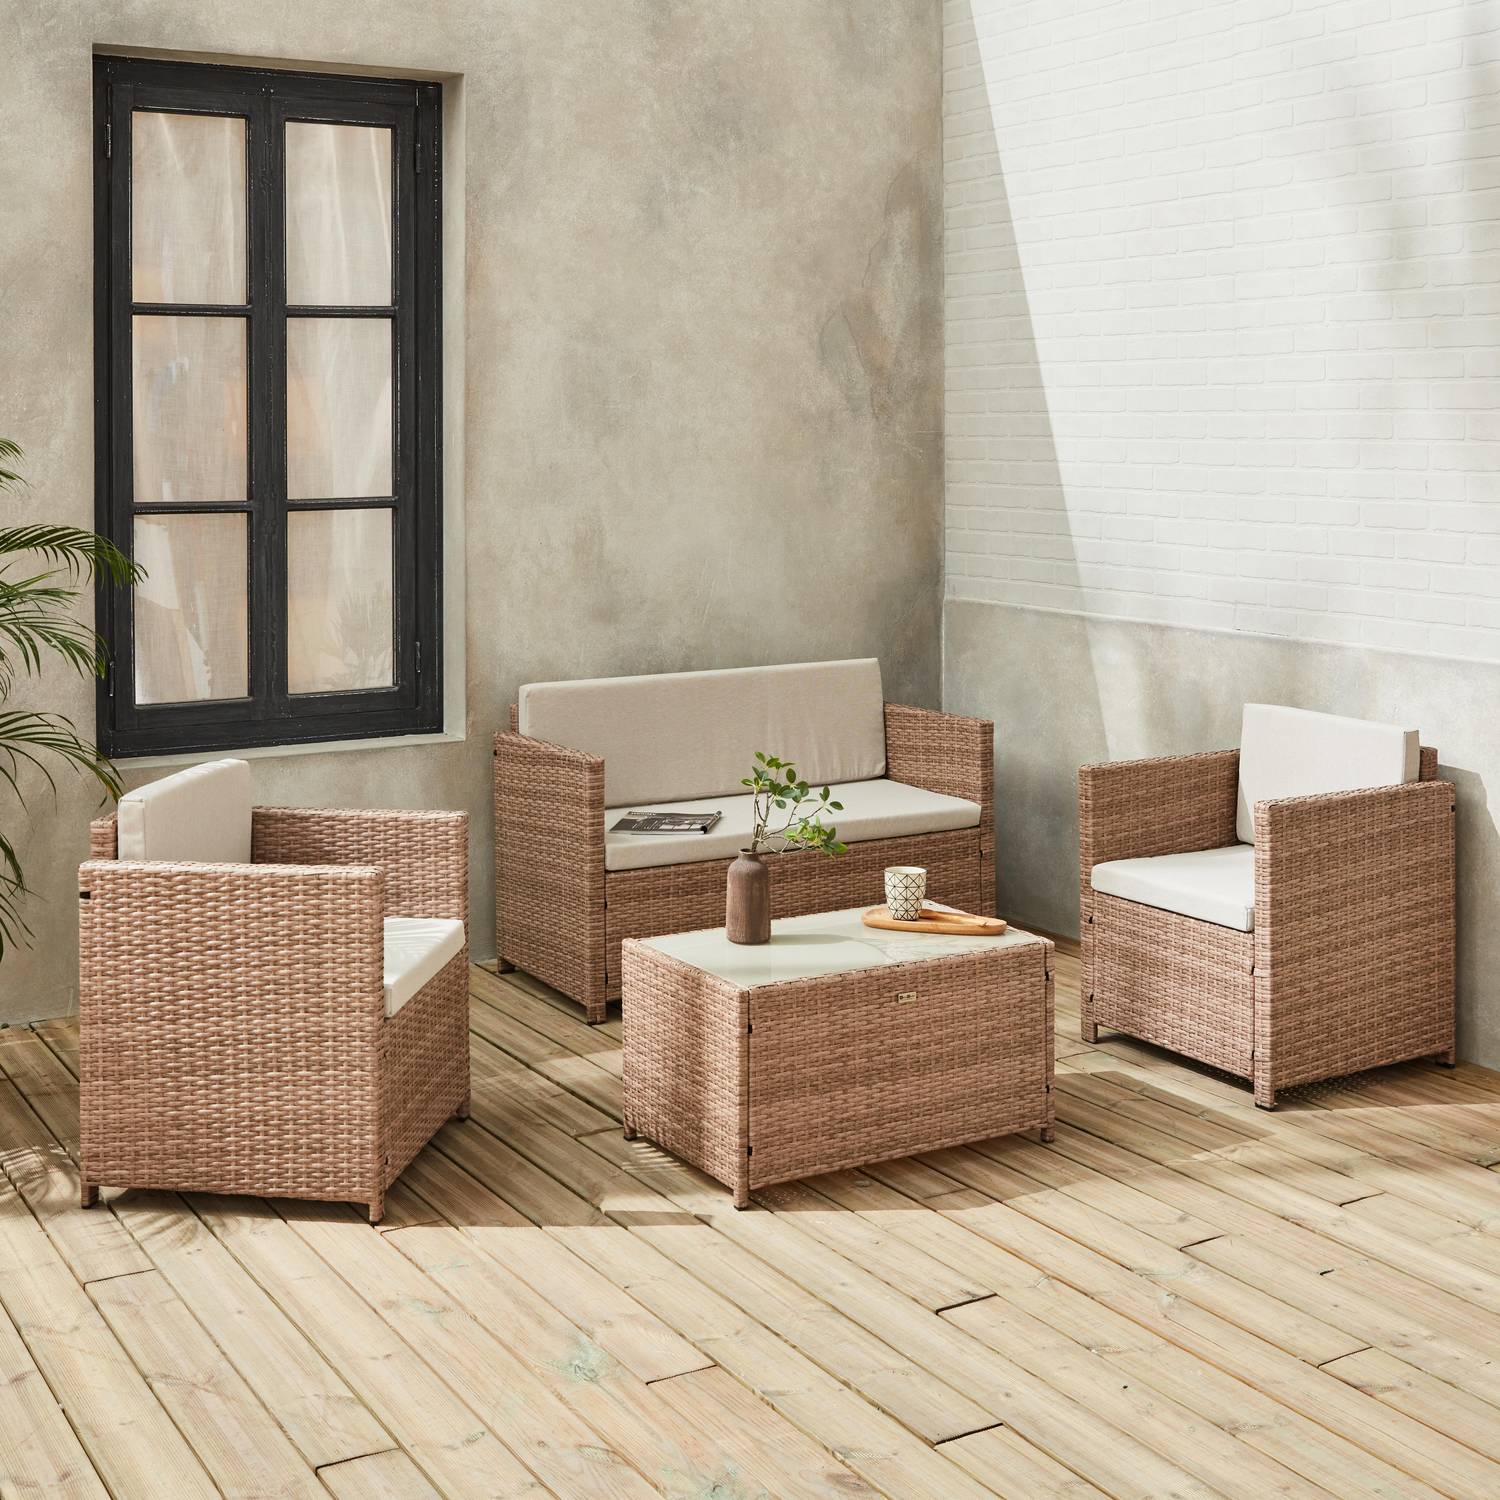 4-seater polyrattan garden sofa set - sofa, 2 armchairs, coffee table - Perugia - Natural Beige rattan, Beige cushions Photo1